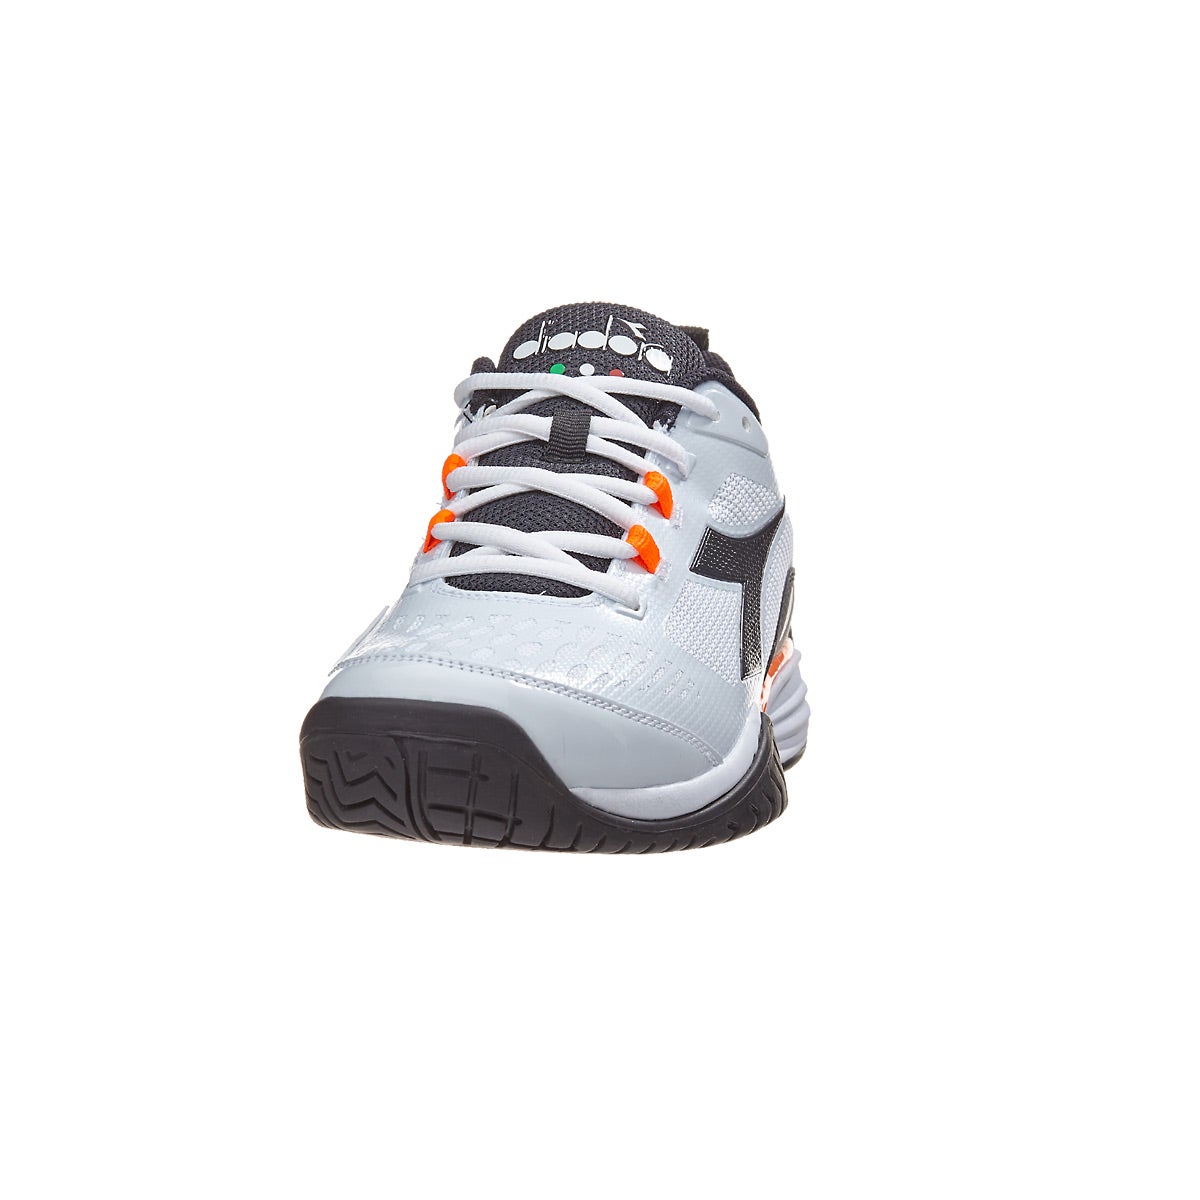 White/Black/Orange Men's Shoe 360° View